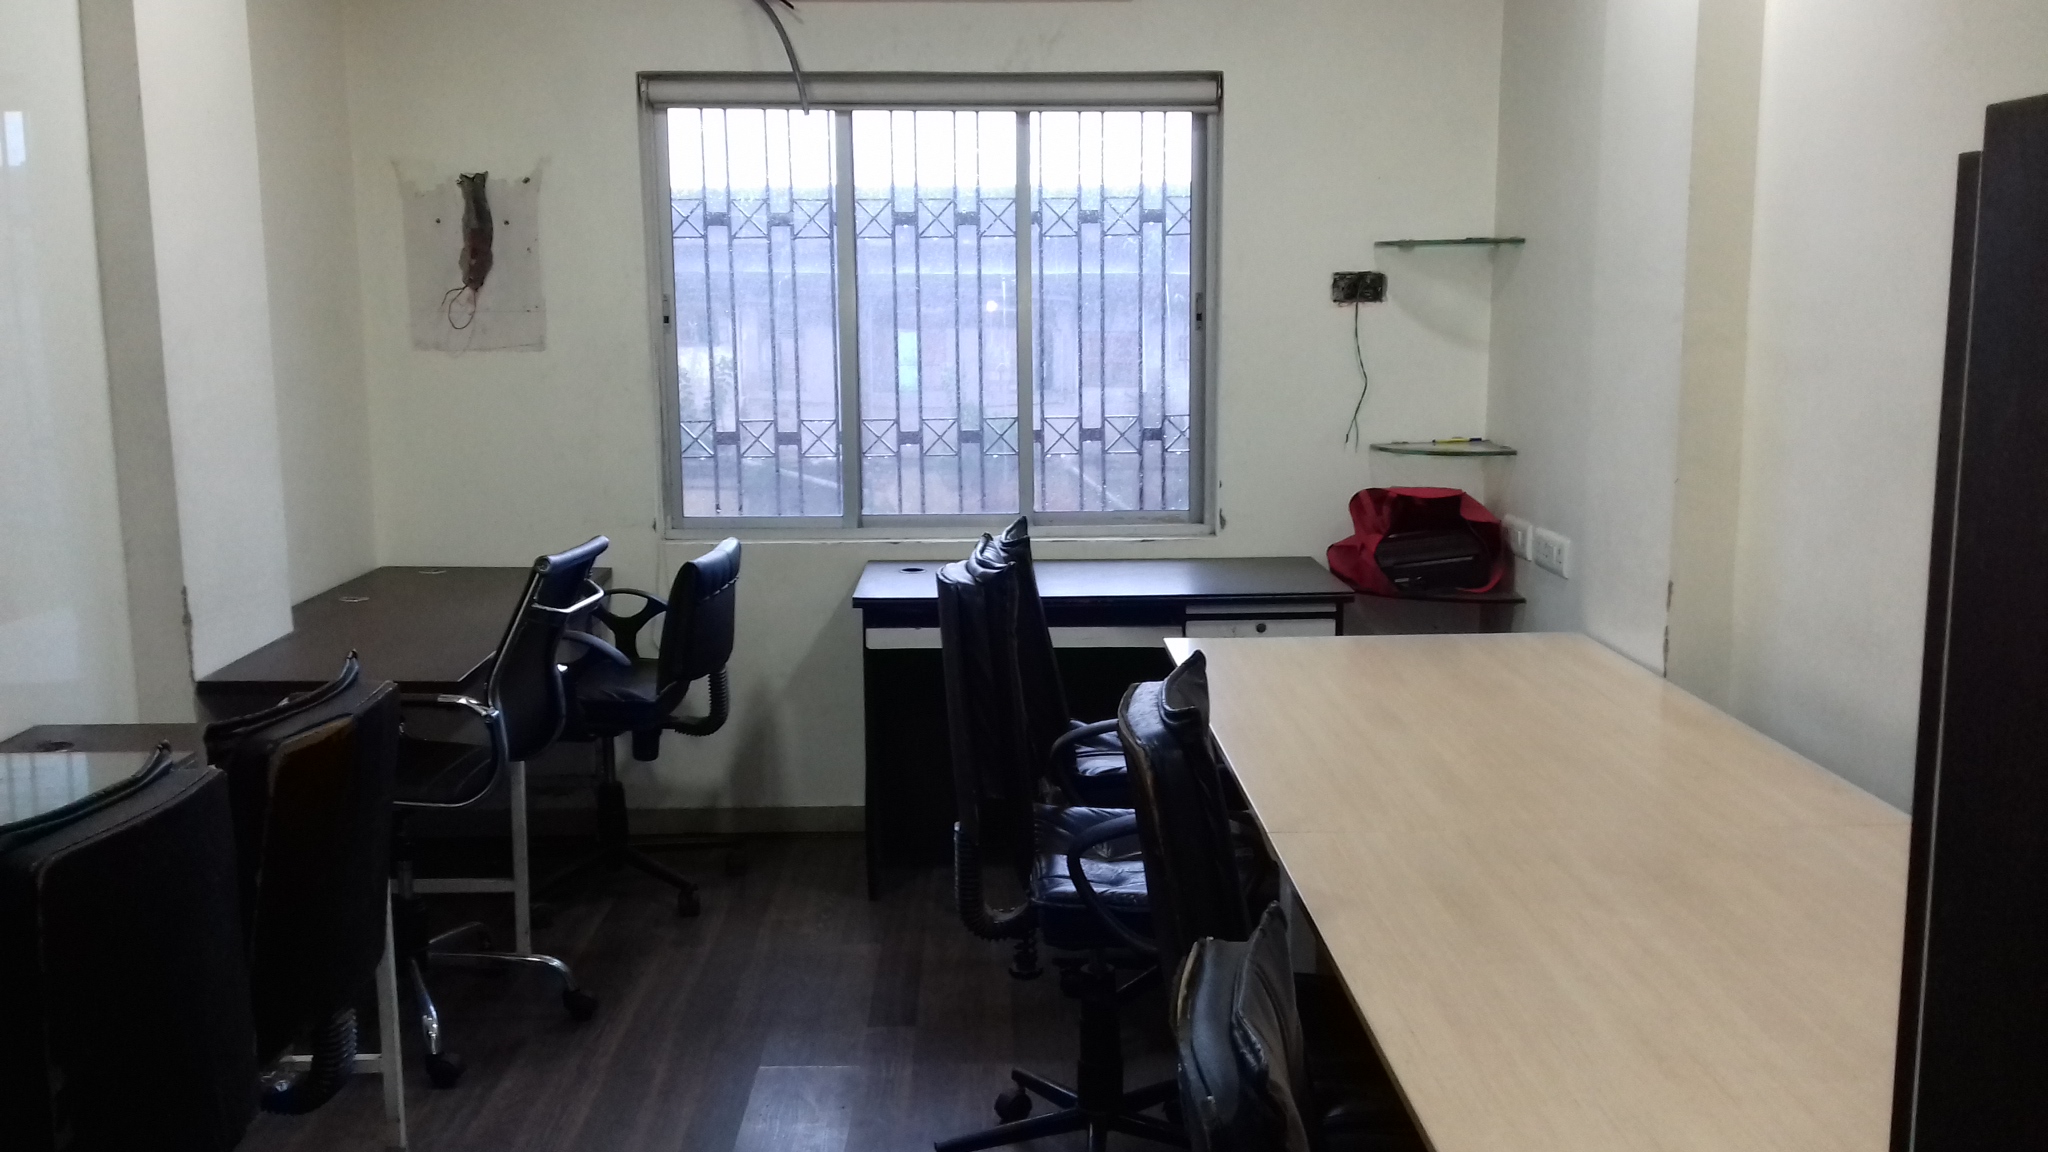 Office For Rent in BB Gangully Street Kolkata (Id: 19263)